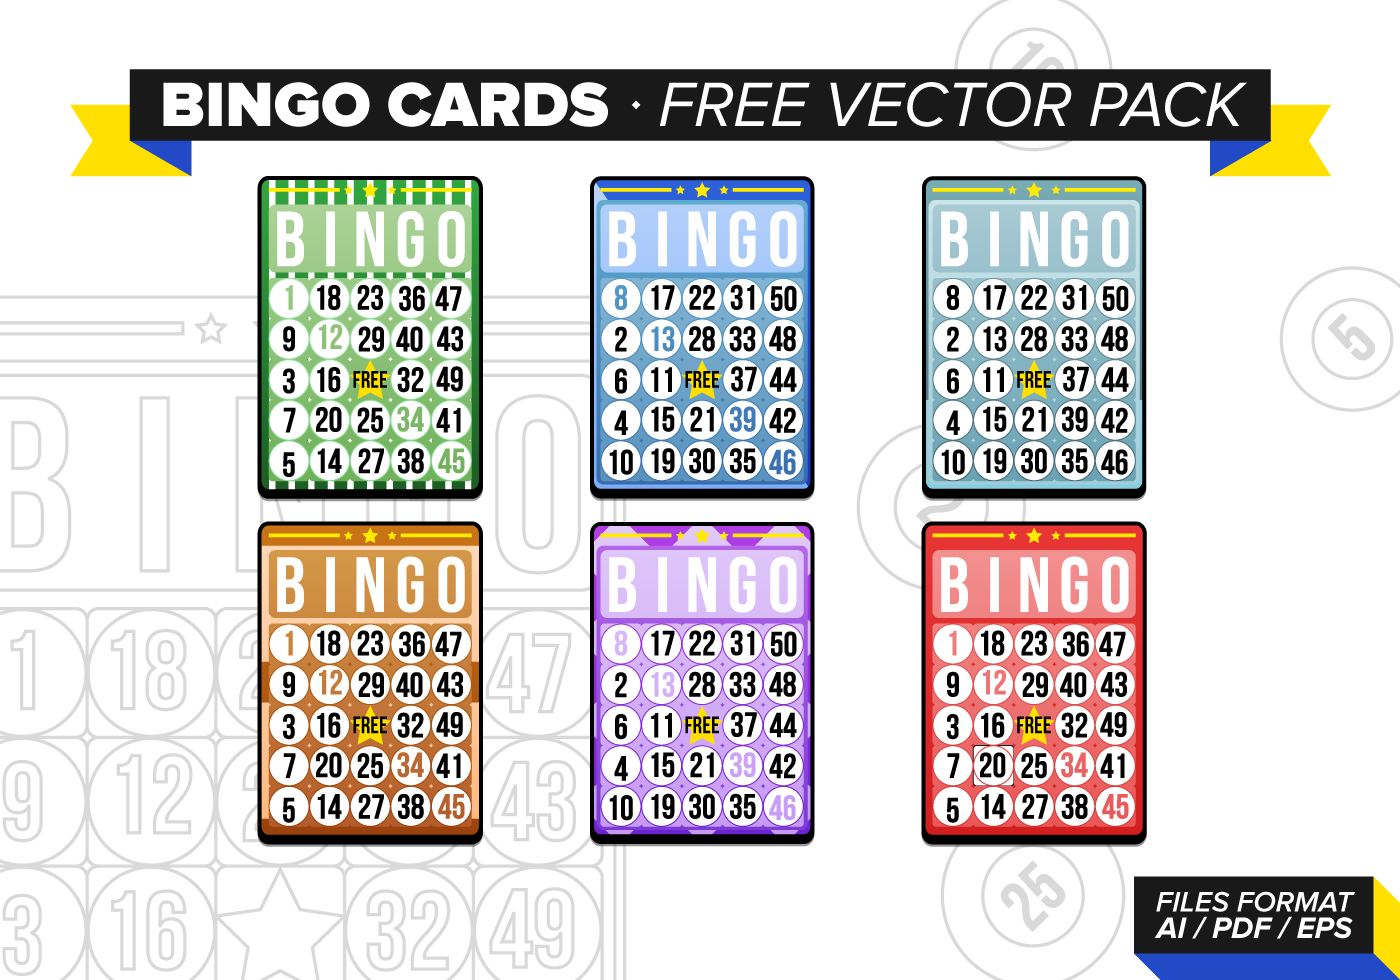 Bingo Cards Free Vector Pack Download Free Vector Art Stock Graphics